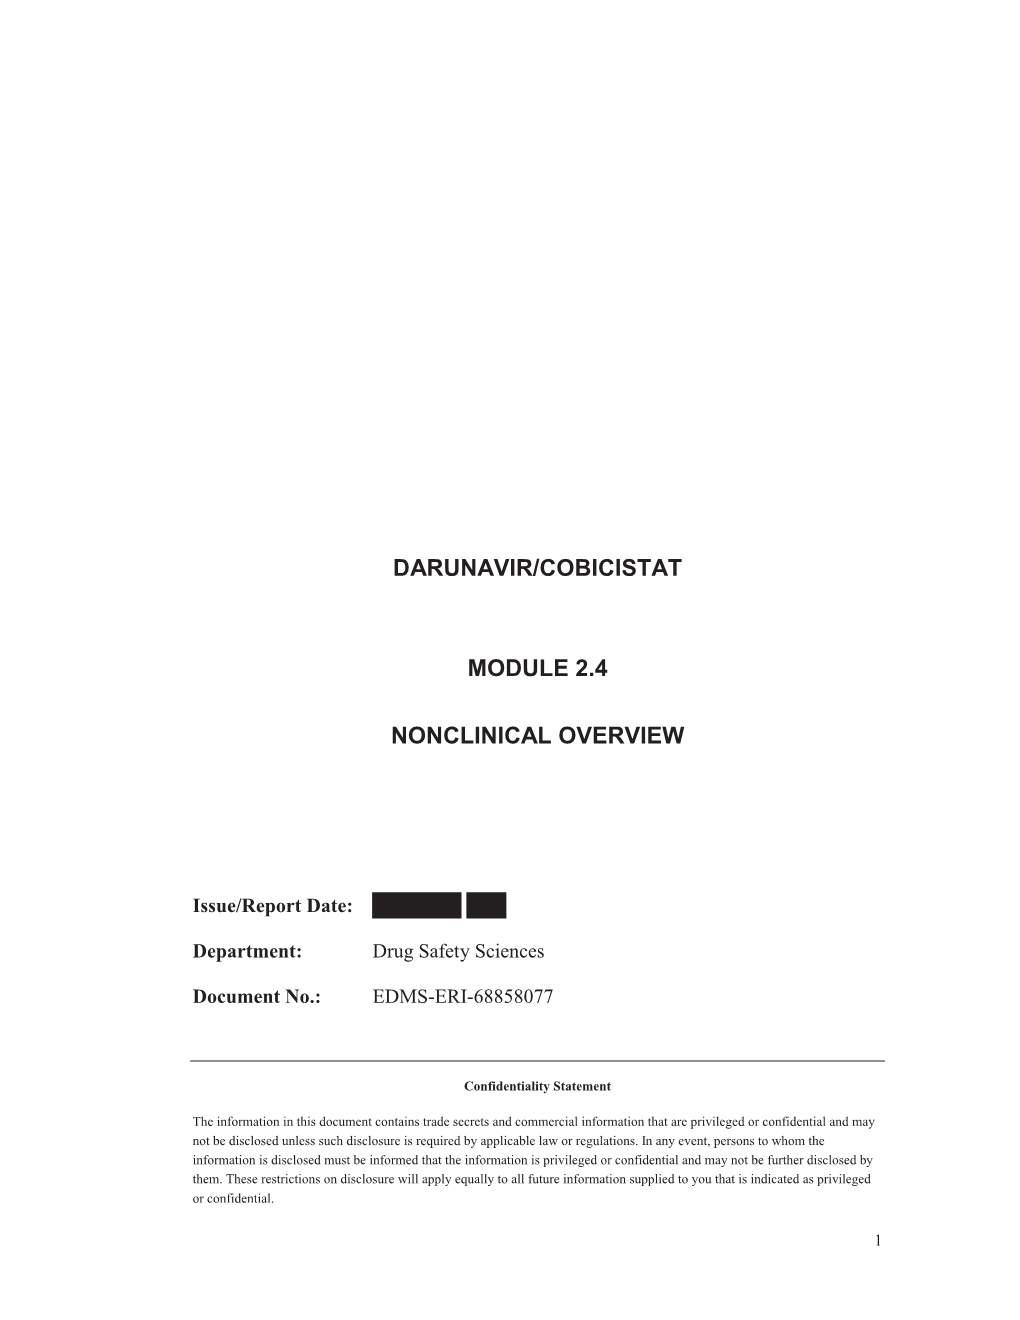 Darunavir/Cobicistat Module 2.4 Nonclinical Overview